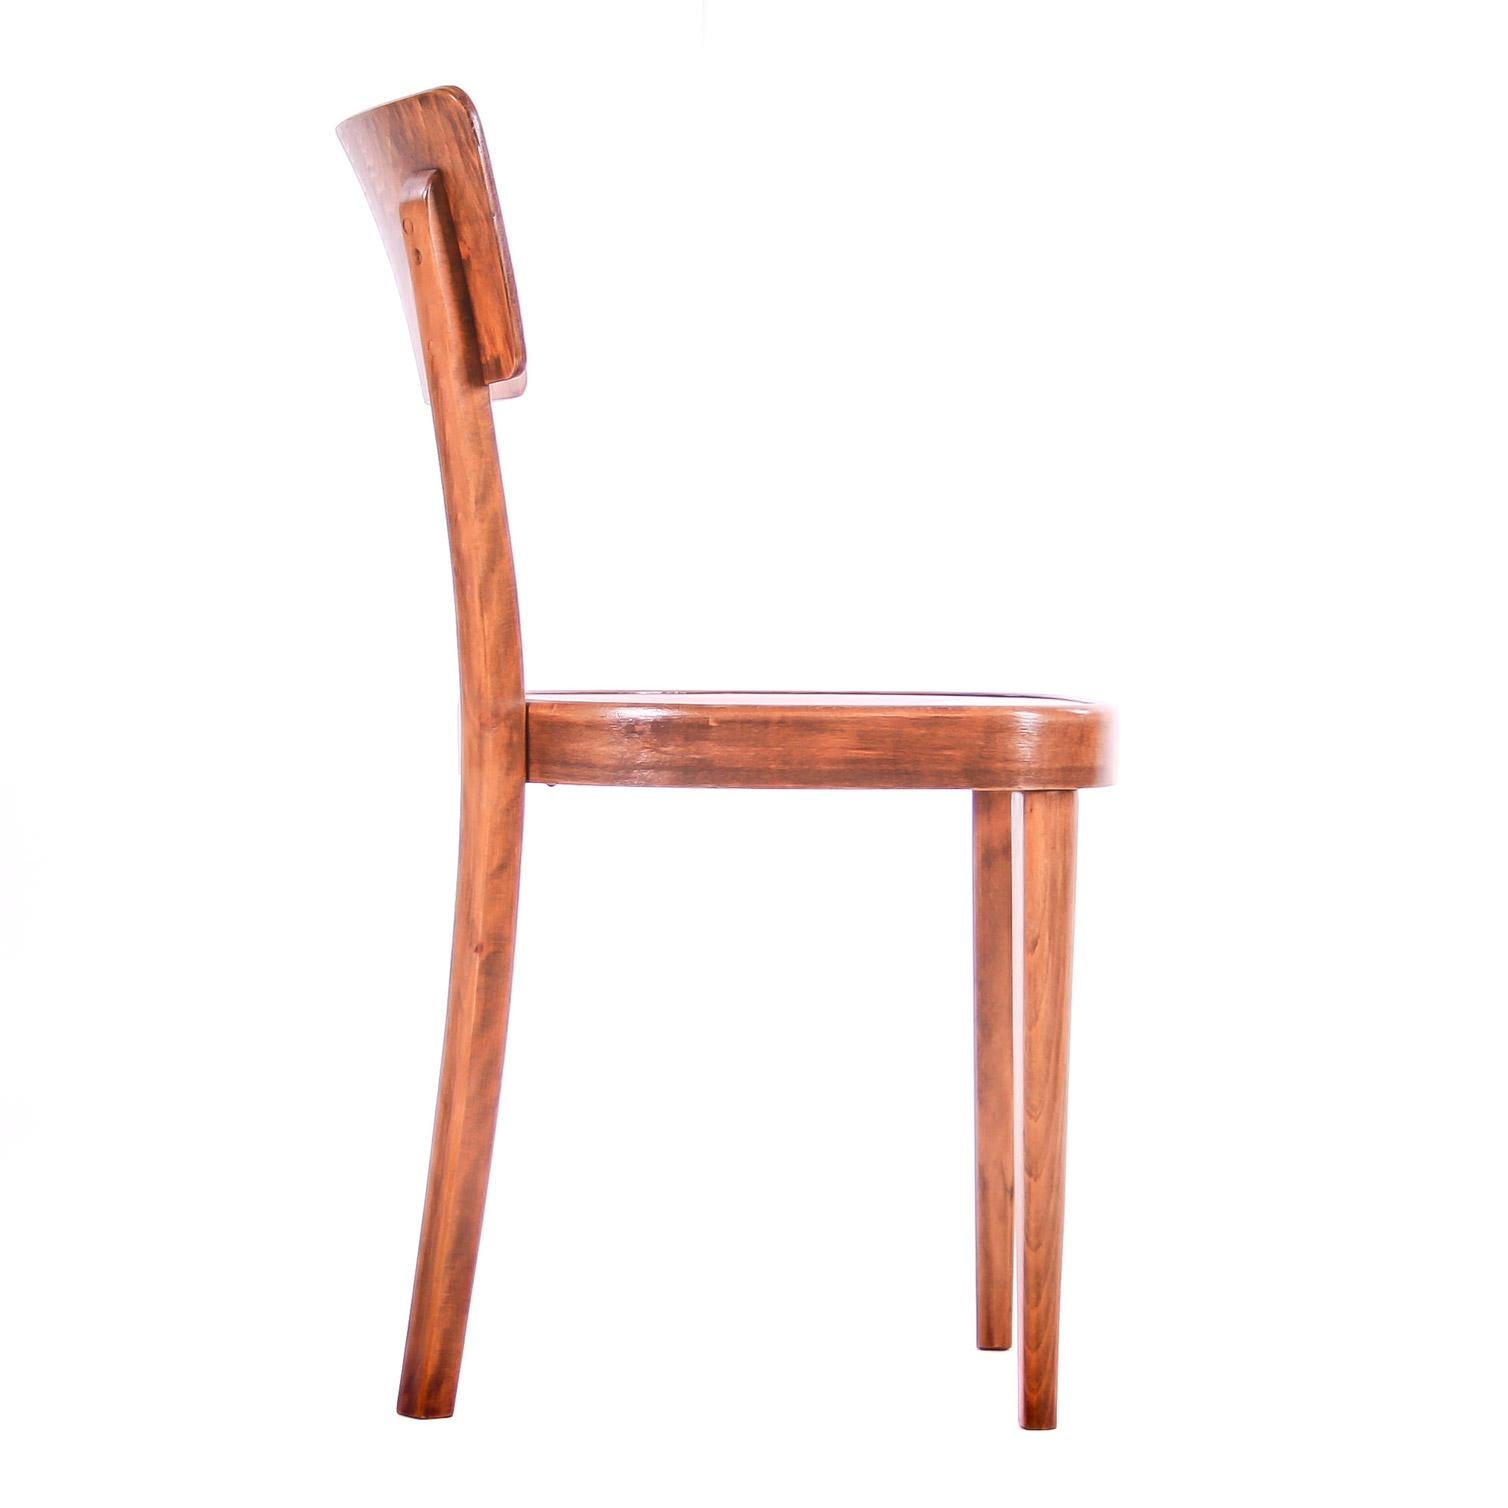 Wood Czech Interwar Avantgard Design Dining Chairs by Jindrich Halabala 'UP Zavody' For Sale